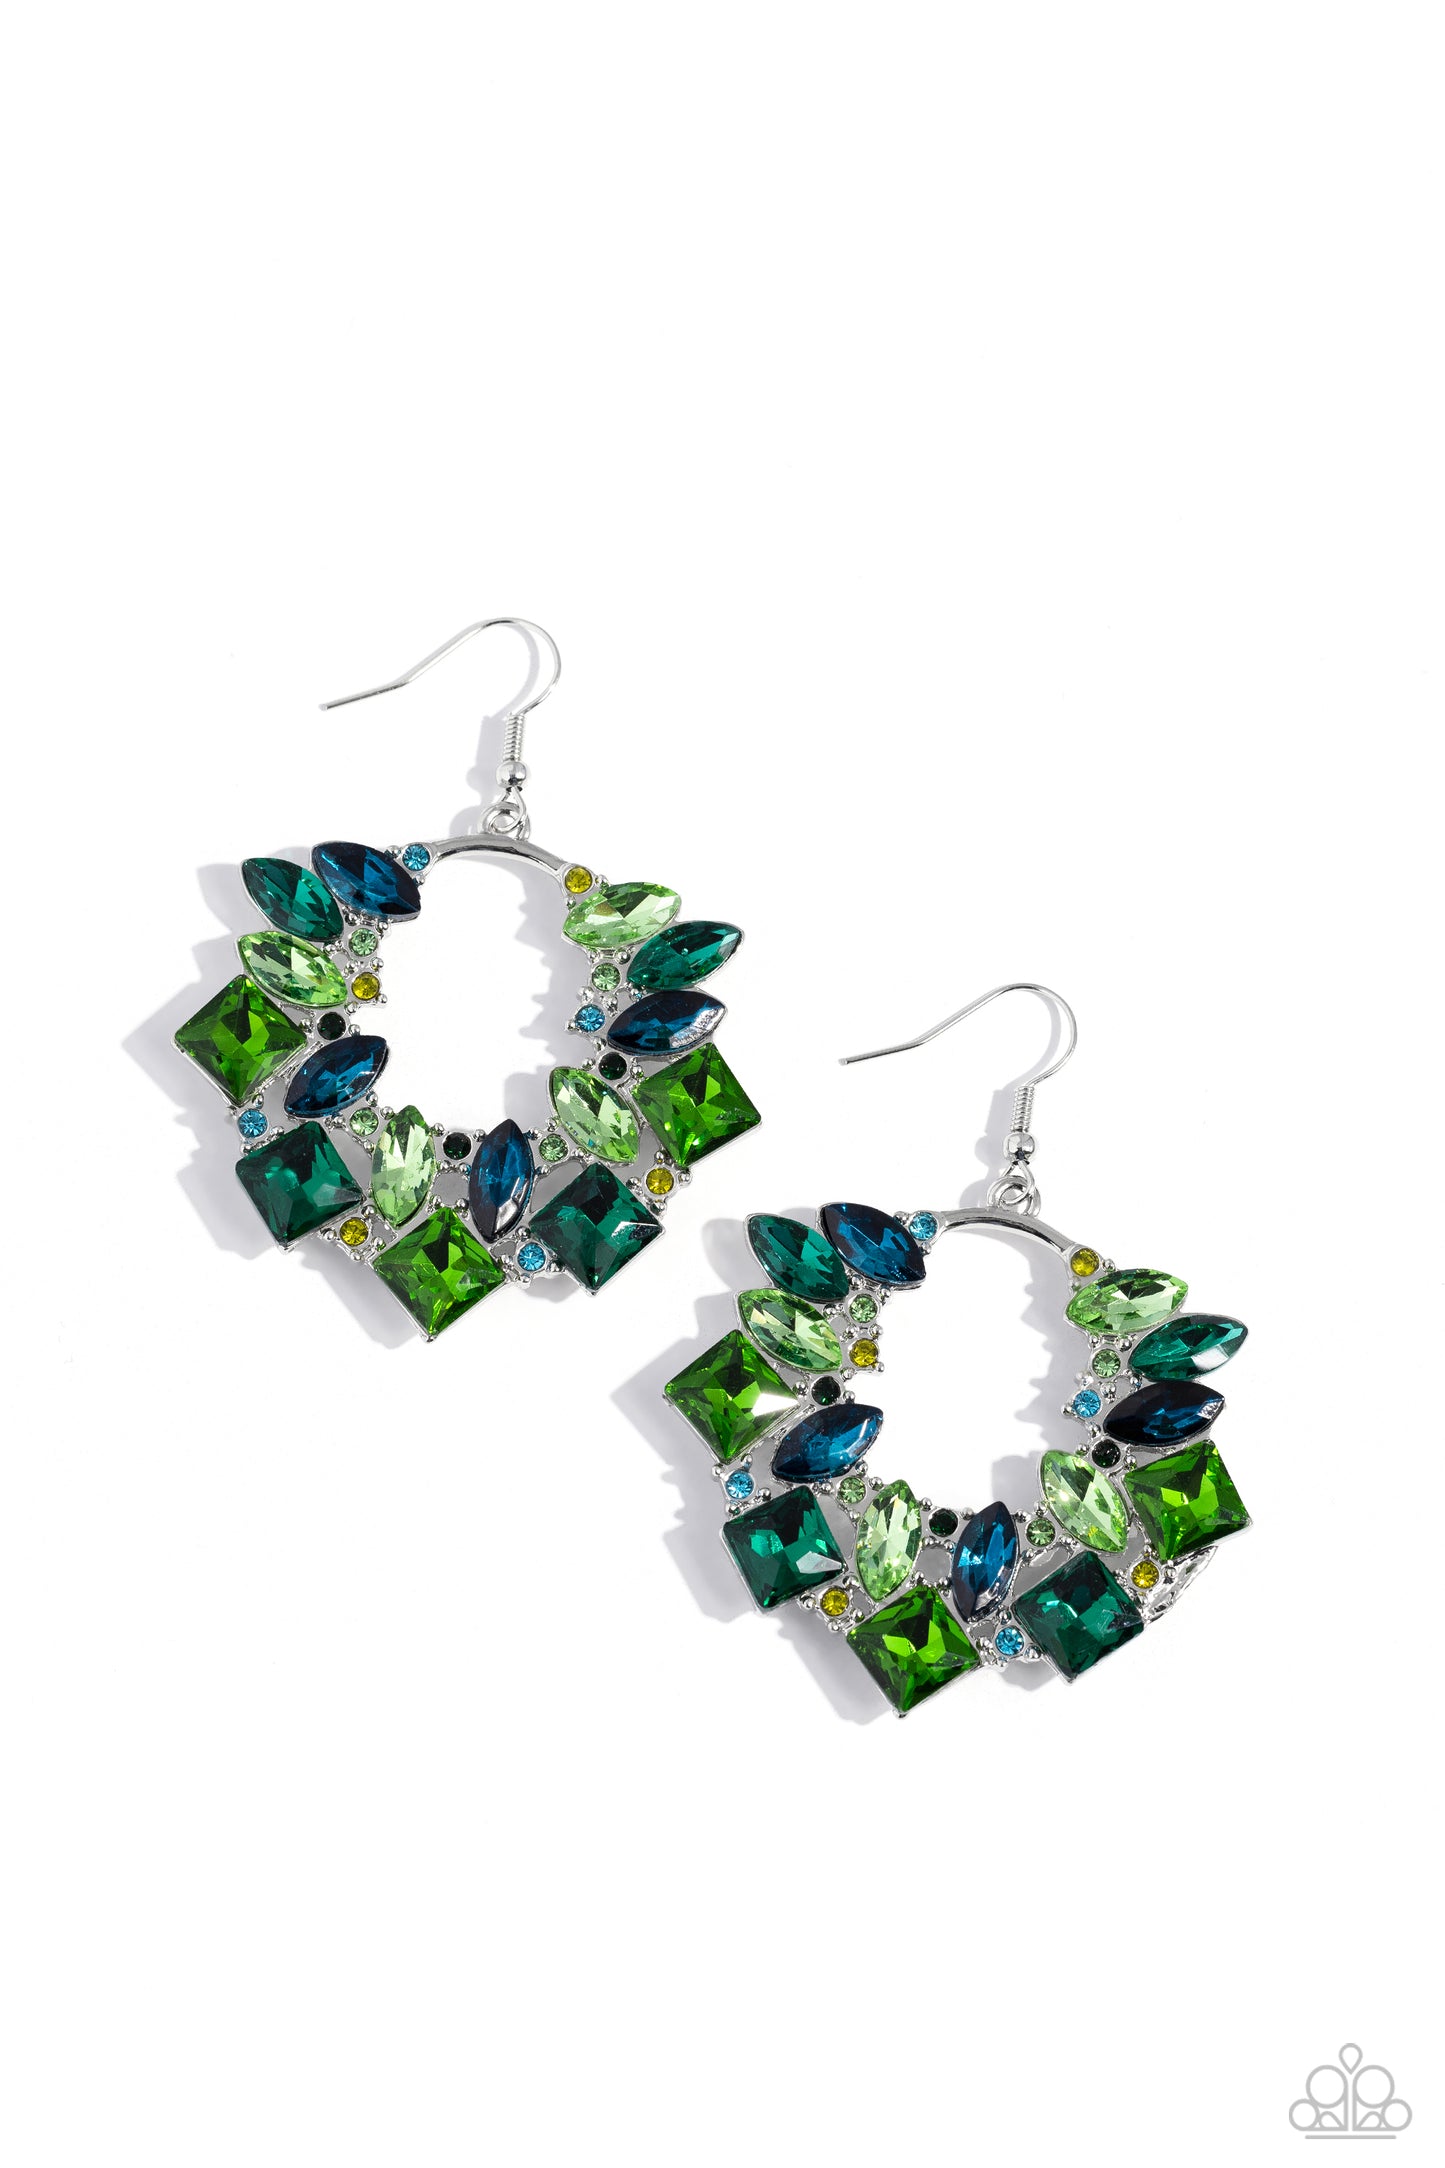 Paparazzi Wreathed in Watercolors - Green Earrings